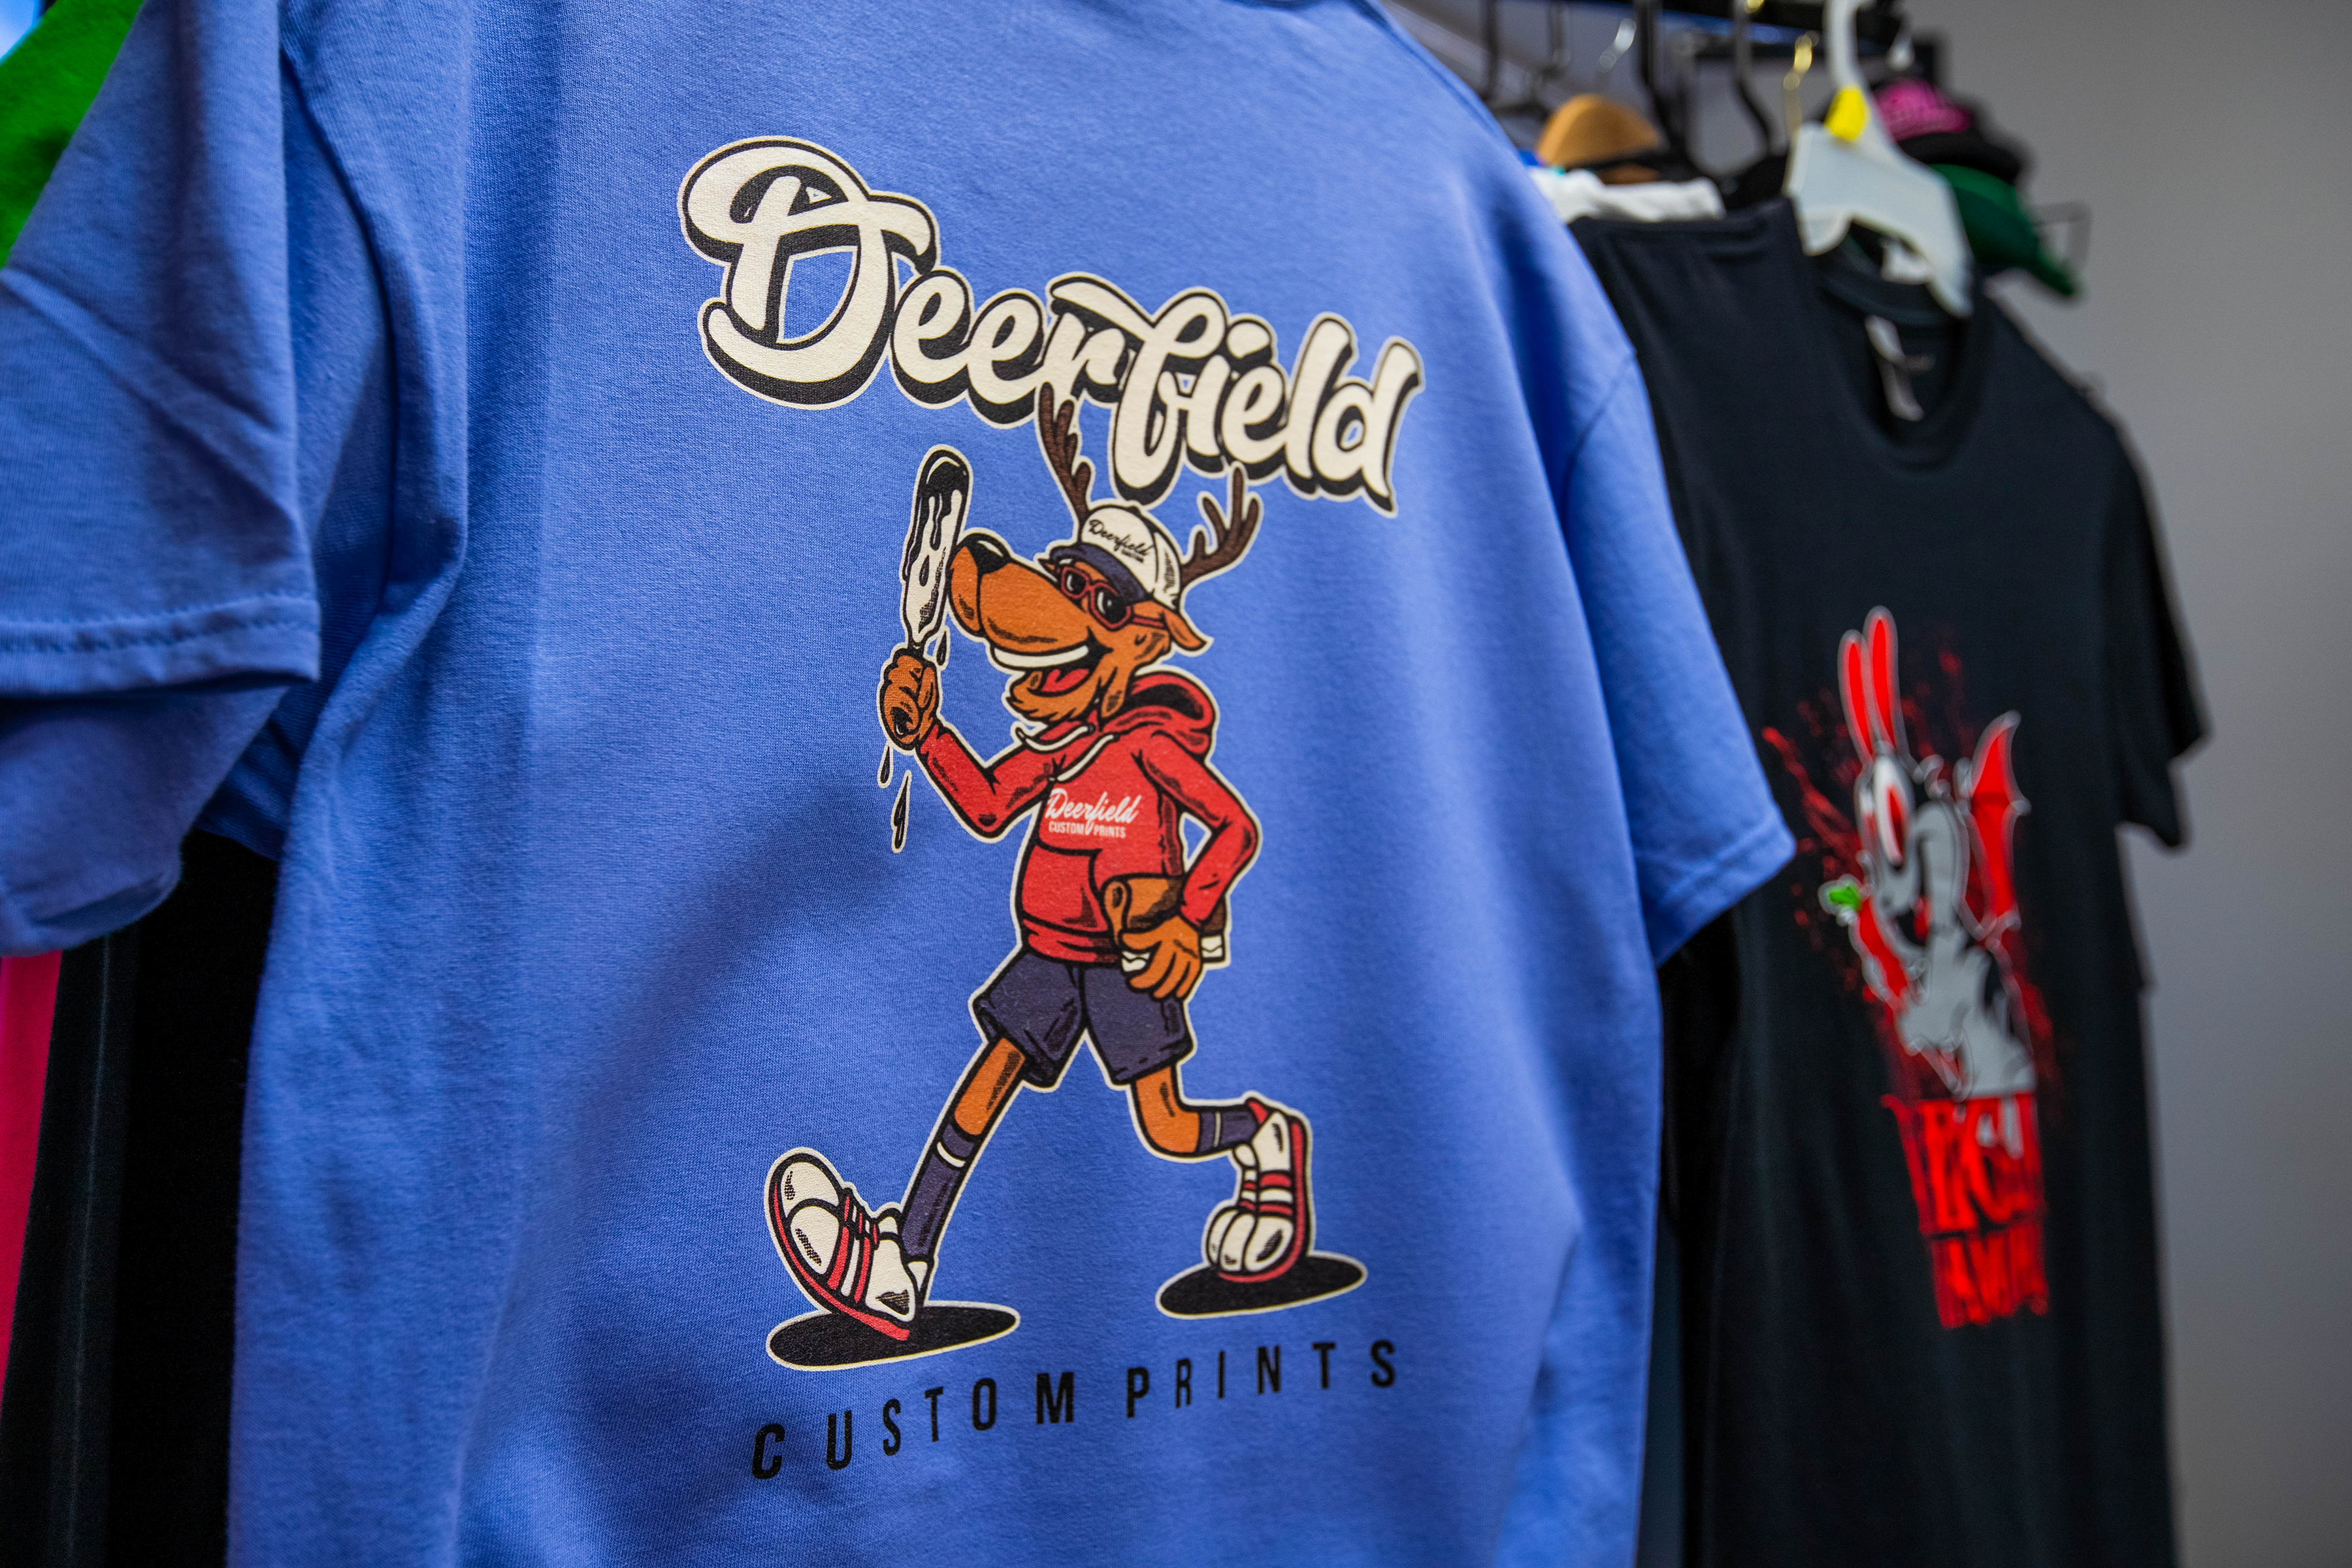 deerfield fulfilment t-shirt printing customize shirts near me